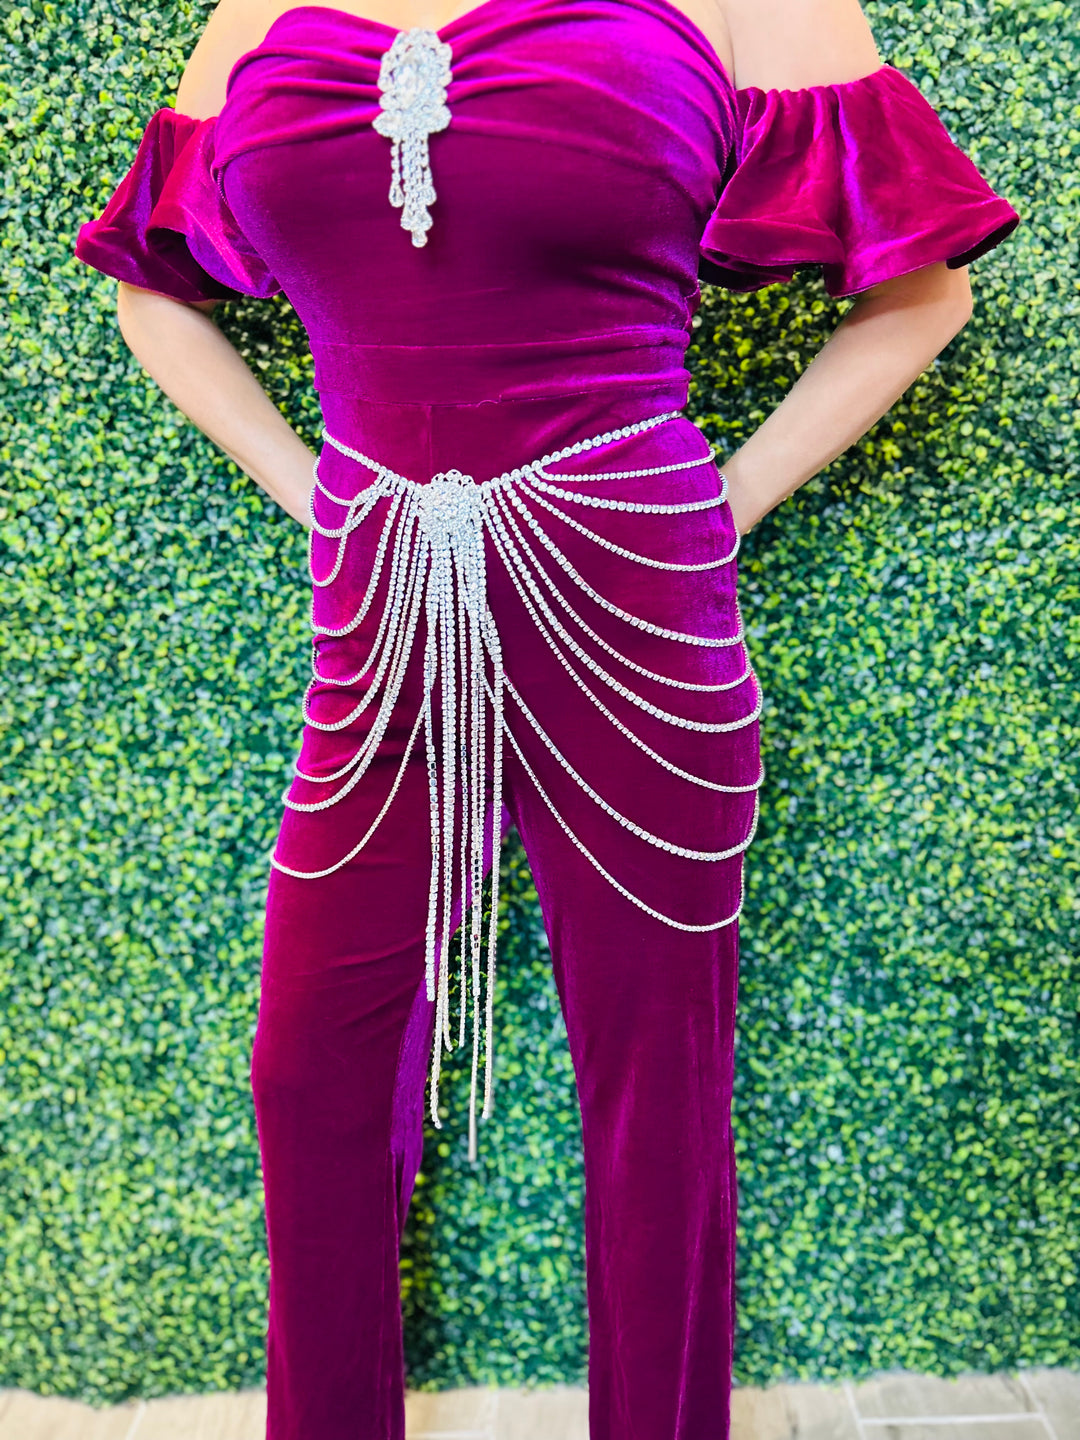 MAGIC MOVES Rhinestone Fringe Belt Skirt-Accessories-Malandra Boutique-Malandra Boutique, Women's Fashion Boutique Located in Las Vegas, NV